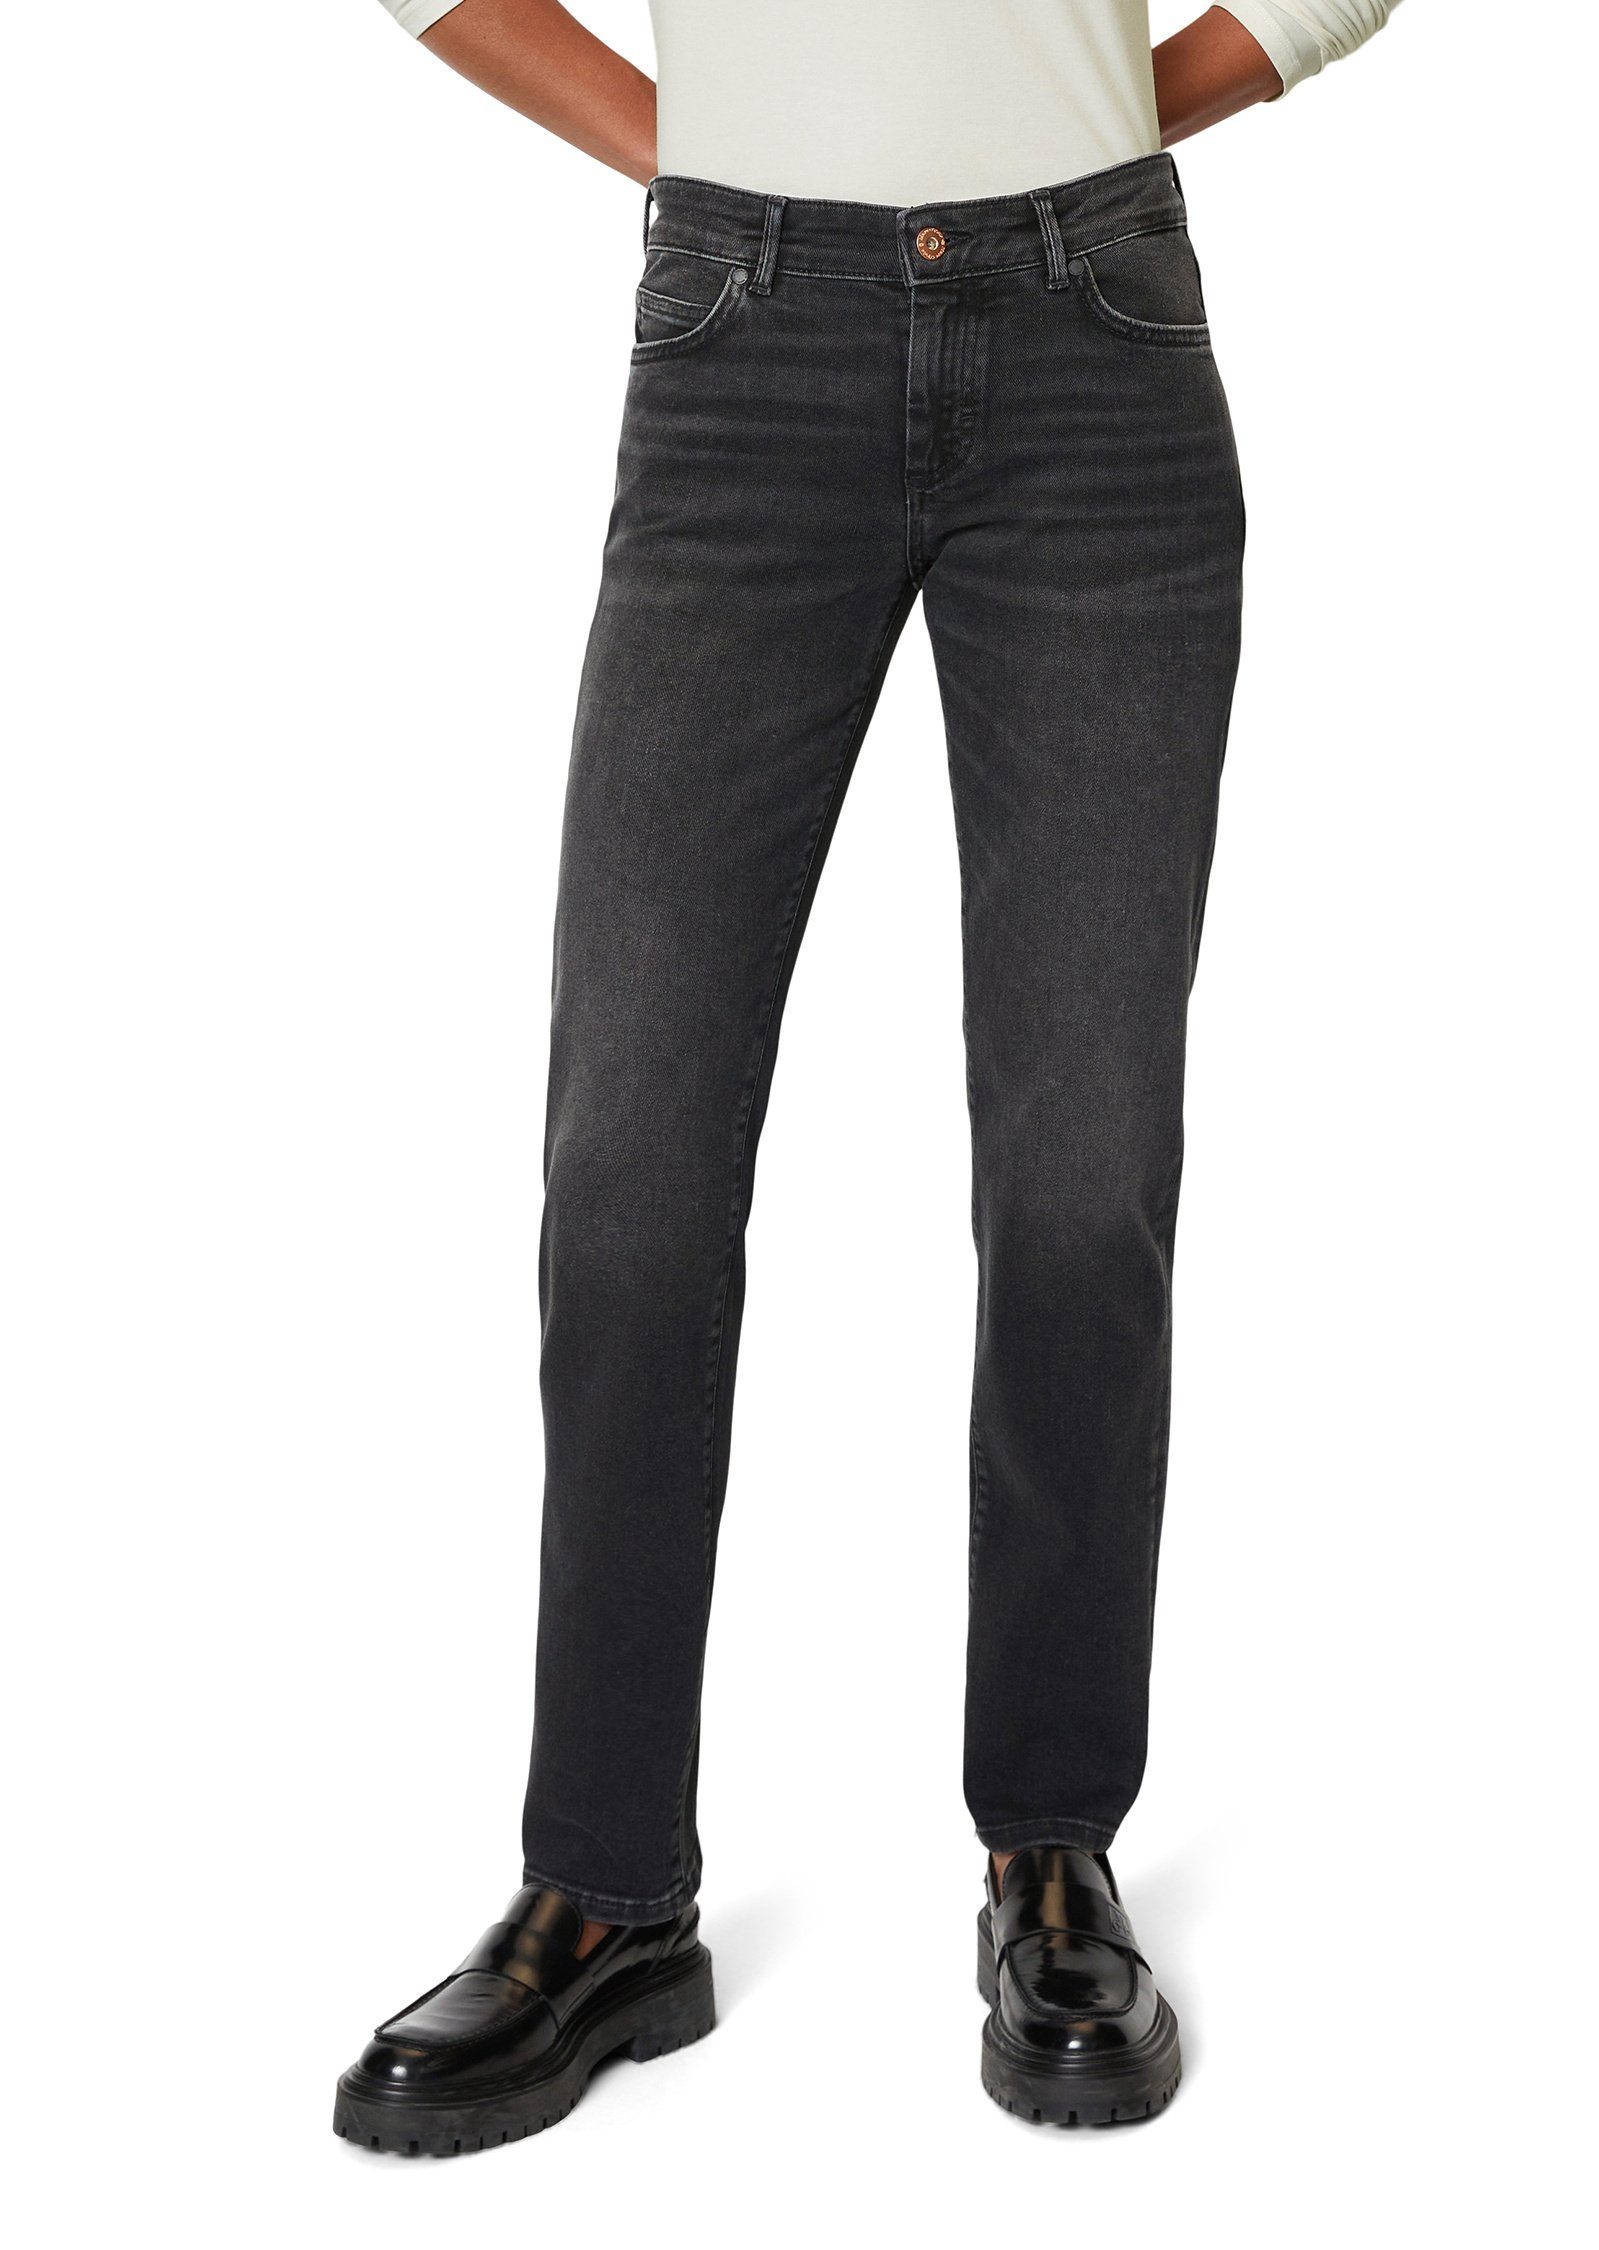 Cotton-Loycell-Stretch 5-Pocket-Jeans O'Polo Organic Marc aus